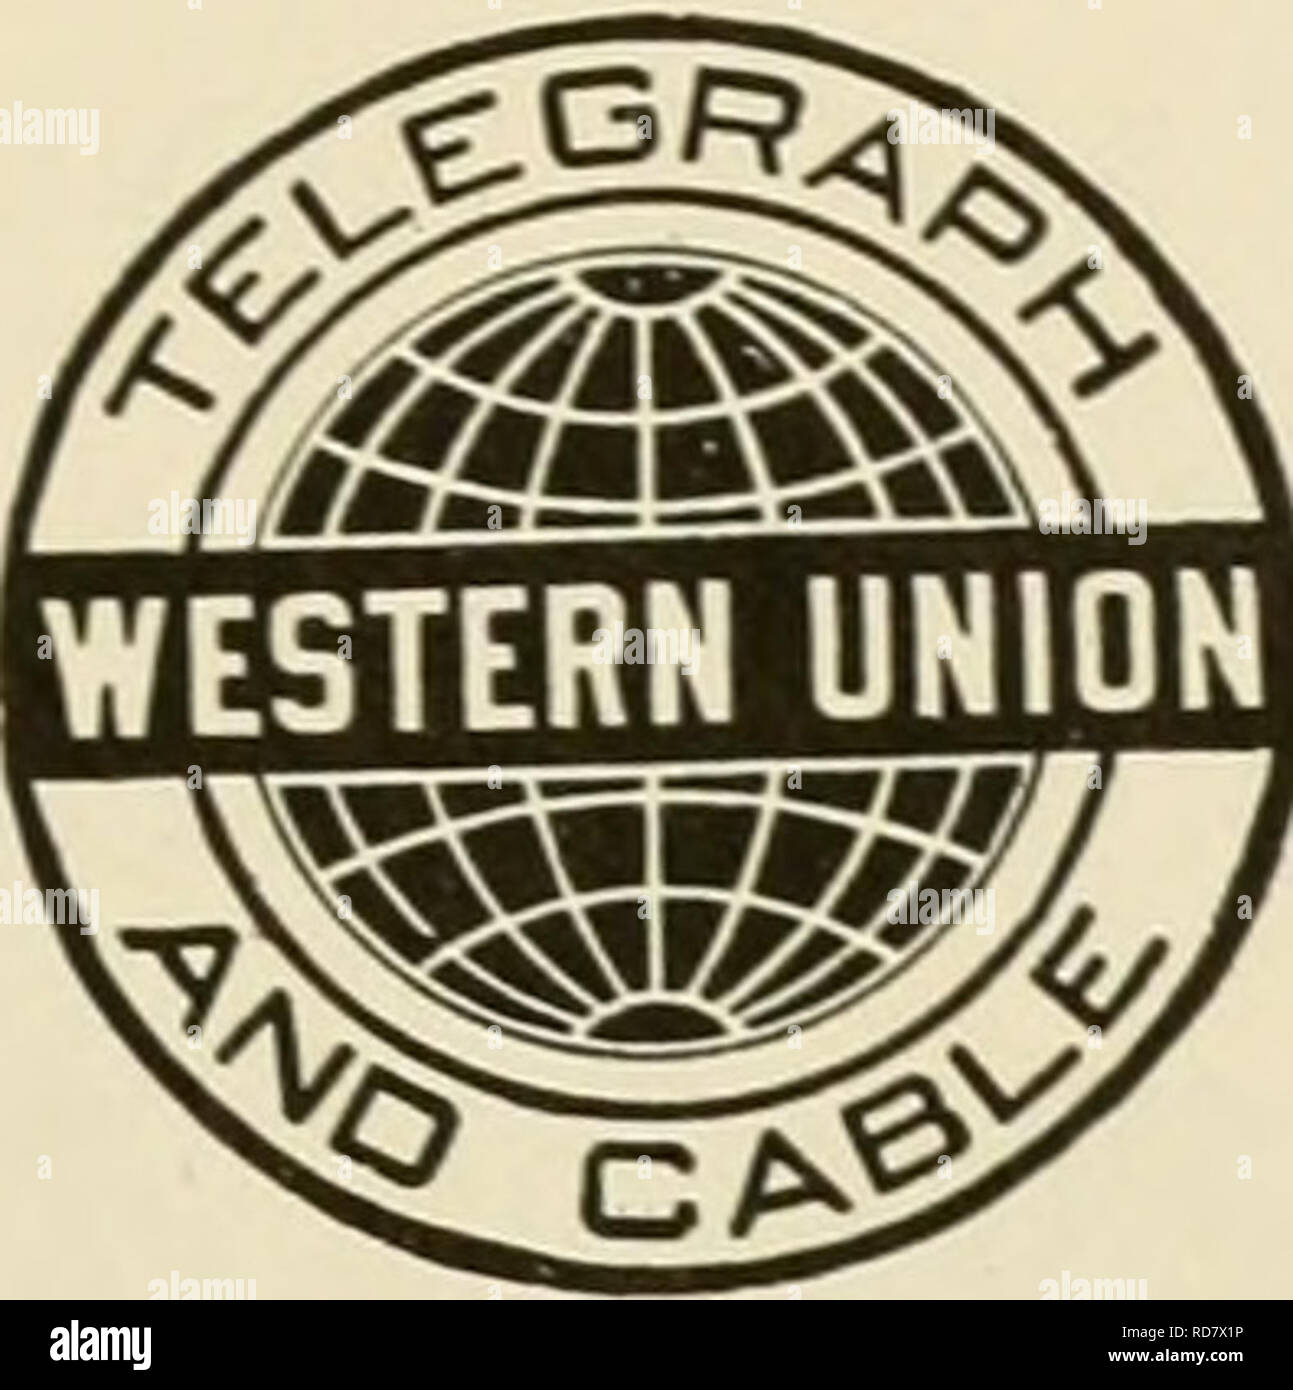 37 fotos de stock e banco de imagens de Western Union Telegraph